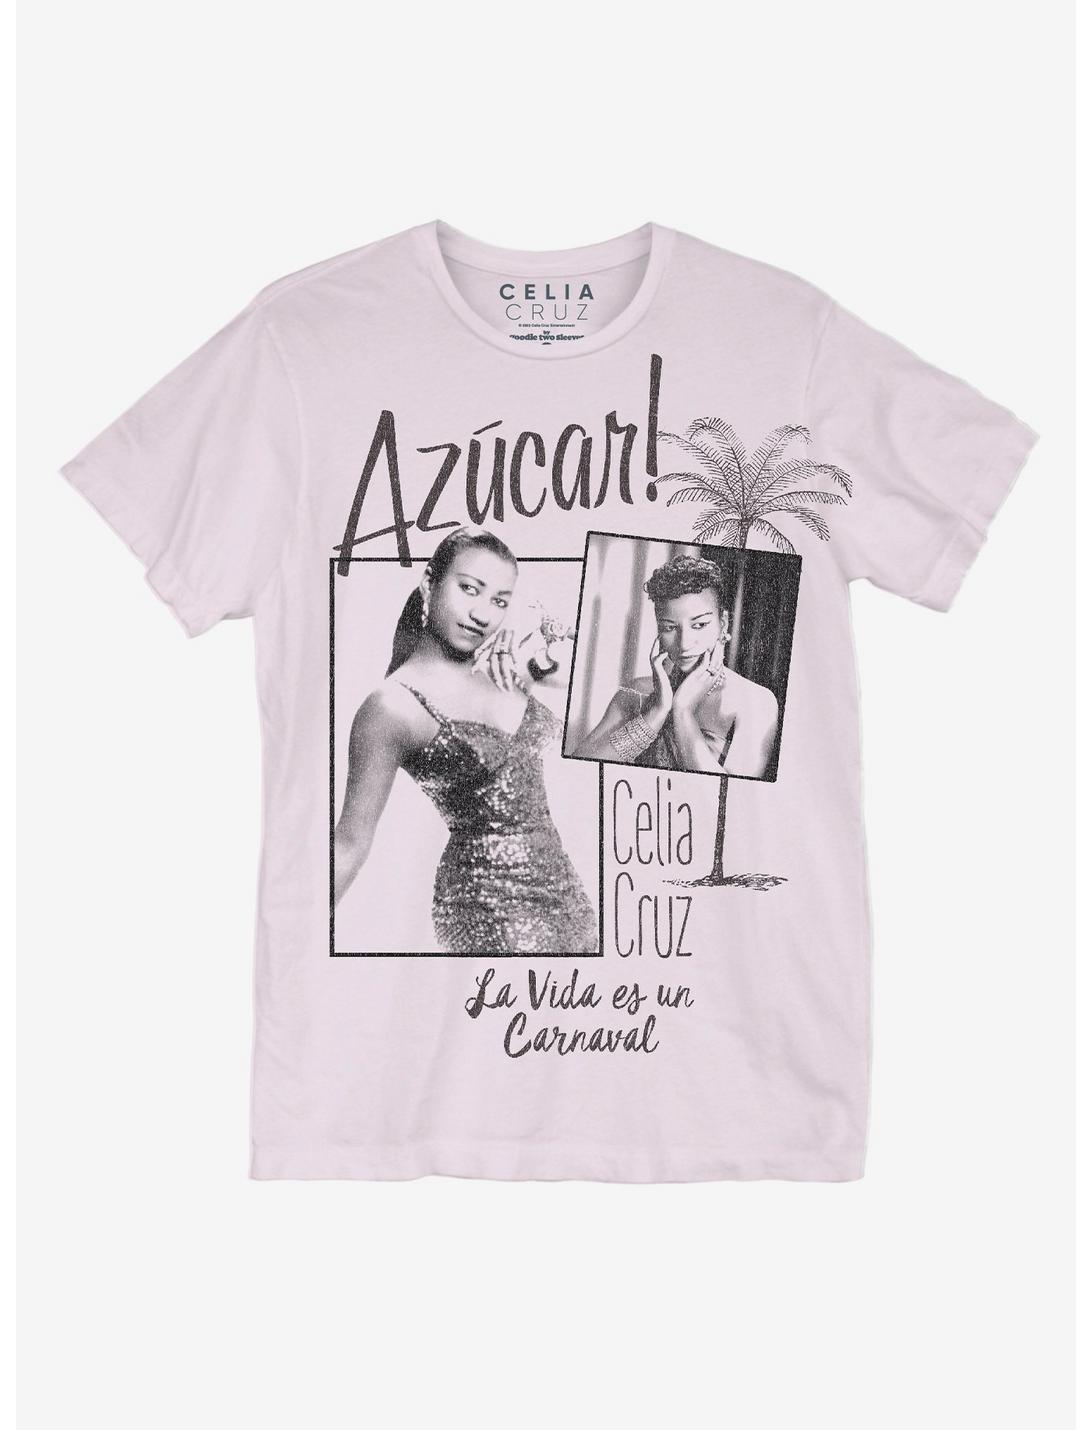 Celia Cruz Azucar Boyfriend Fit Girls T-Shirt, PINK, hi-res